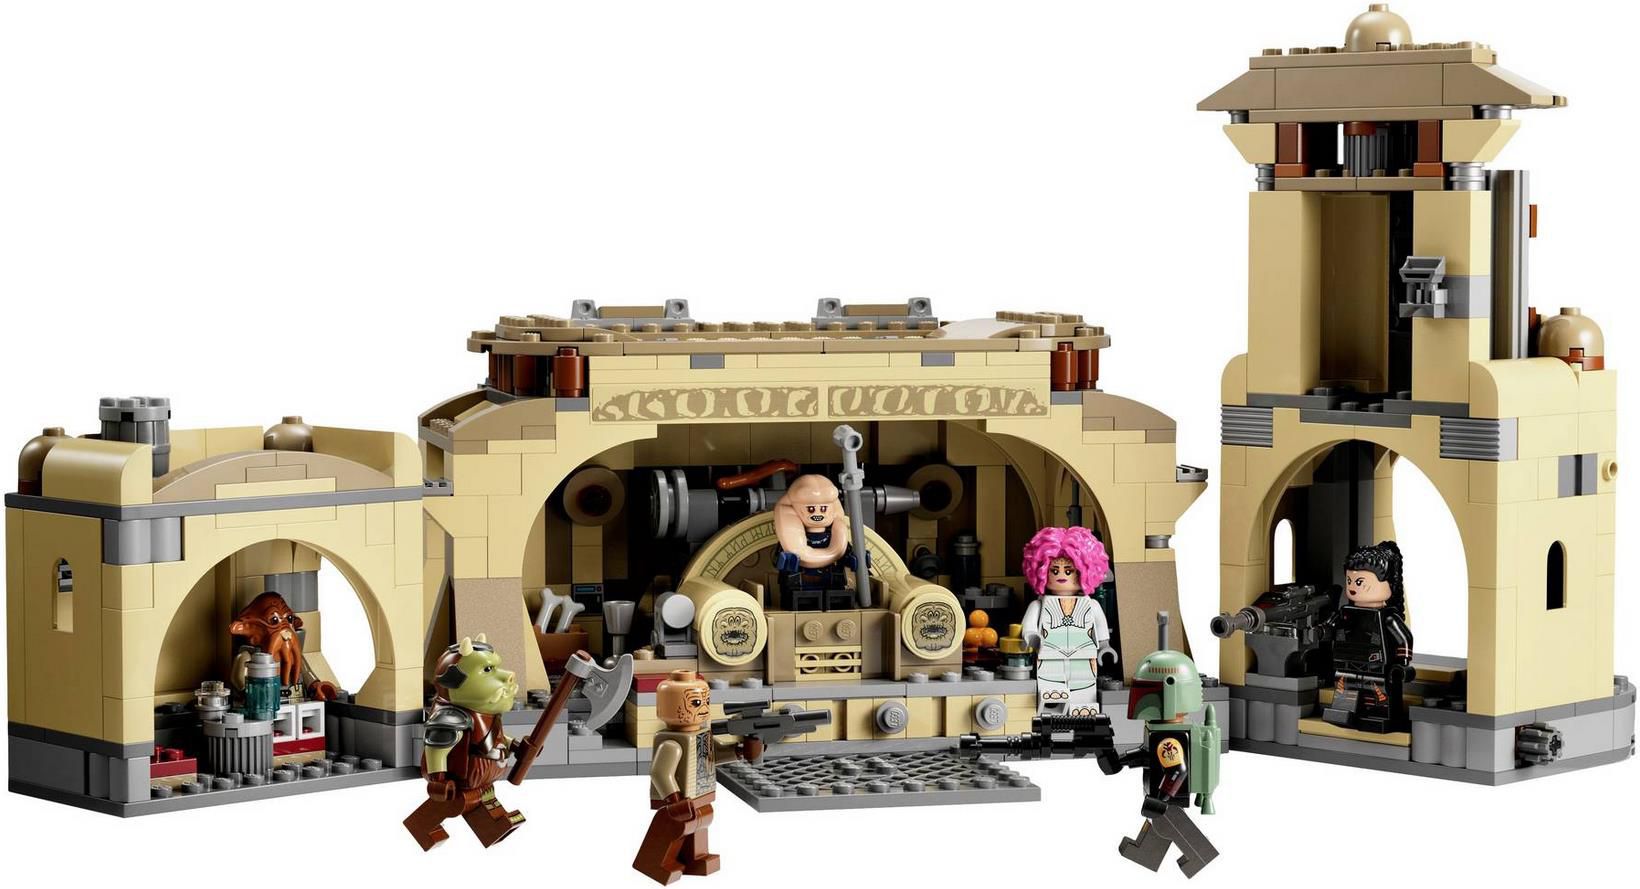 Lego 75326 Star Wars Boba Fetts Thronsaal für 71,54€ (statt 85€)